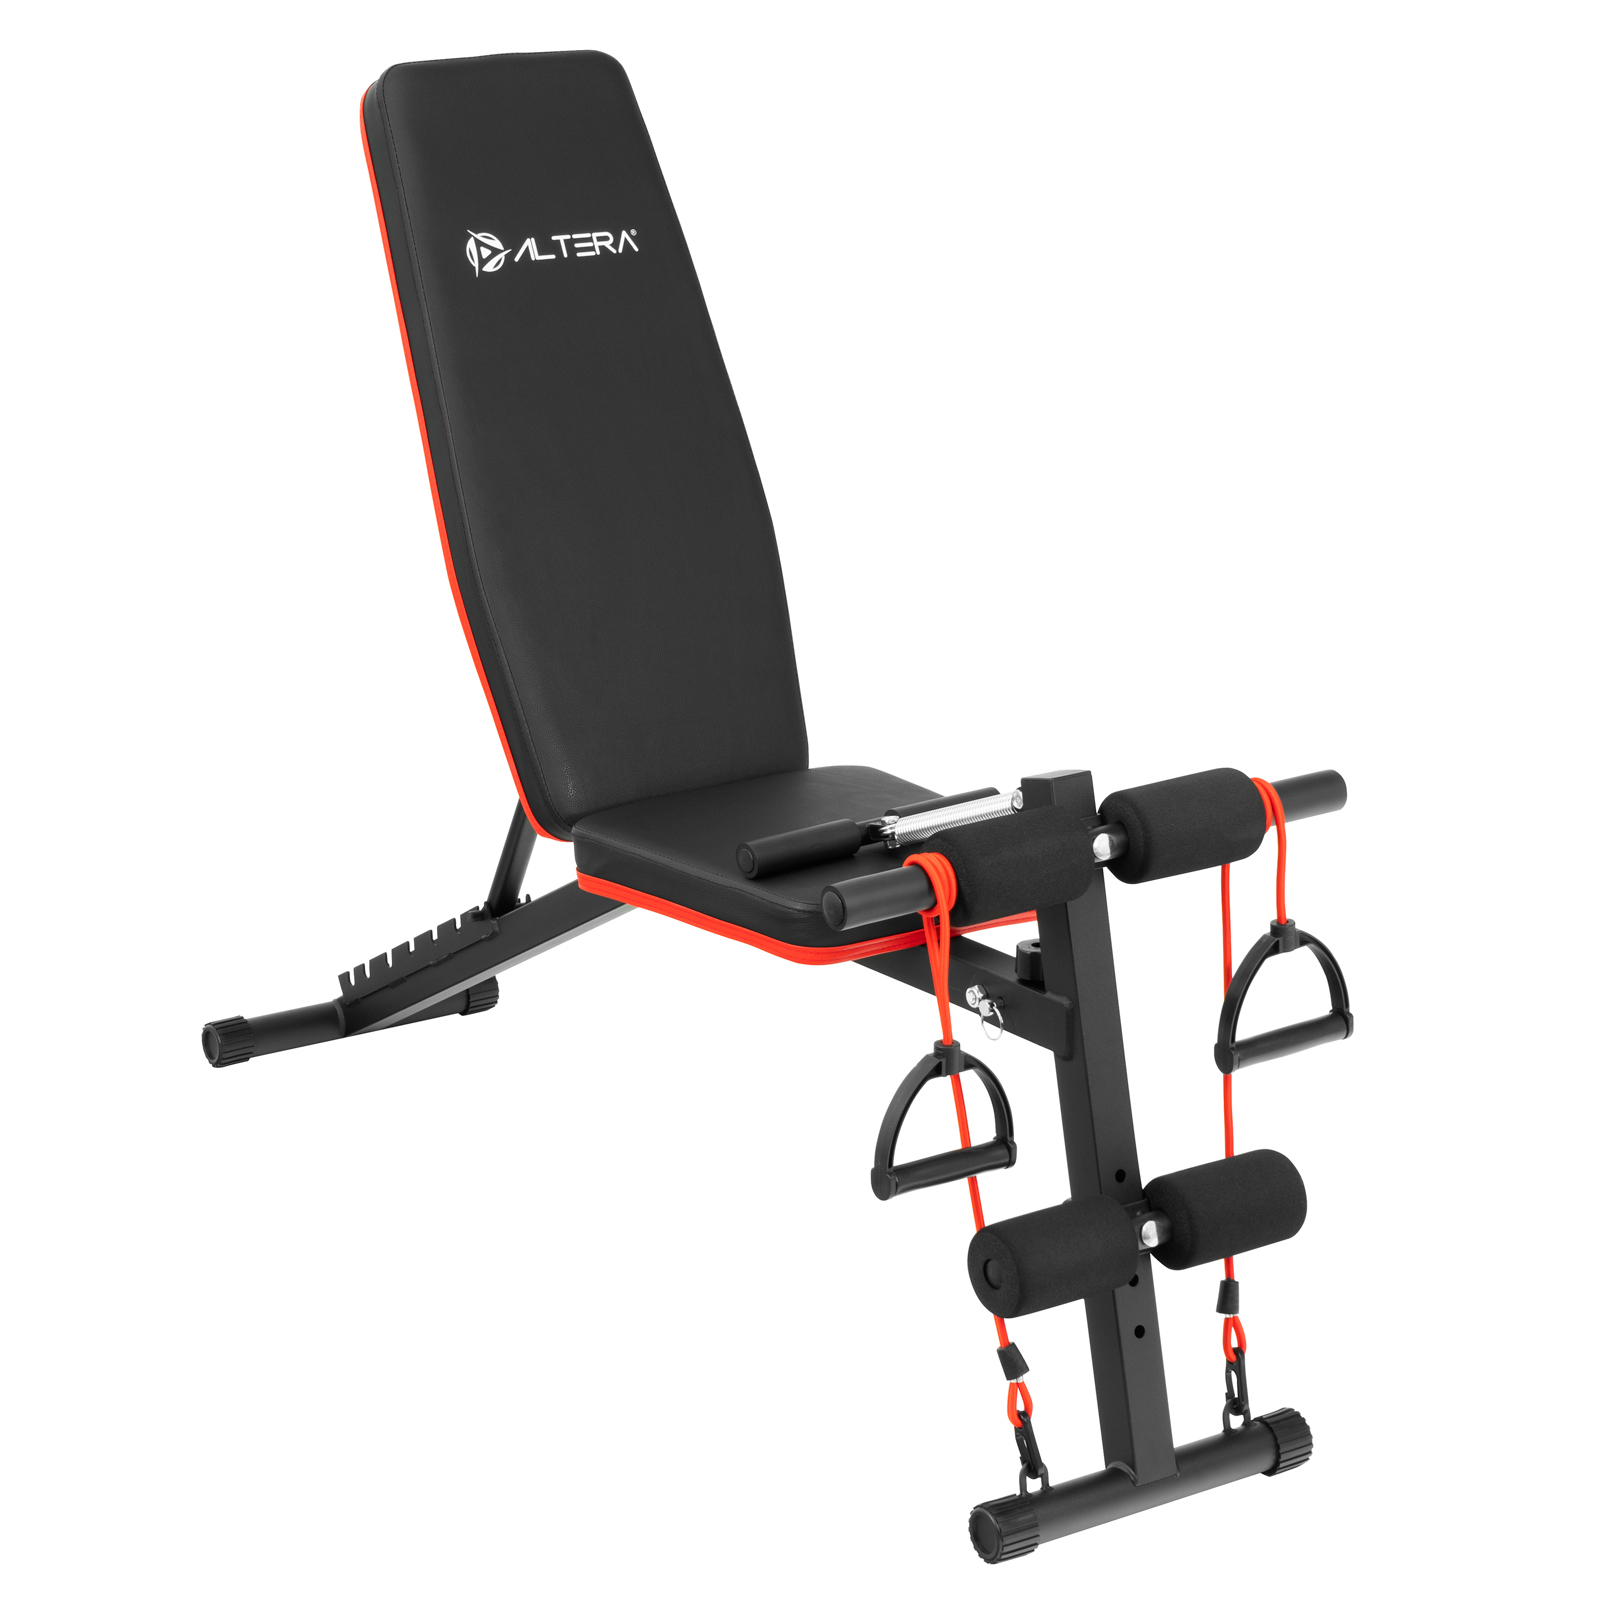 Barra Olimpica S3 – Home Fitness Racks